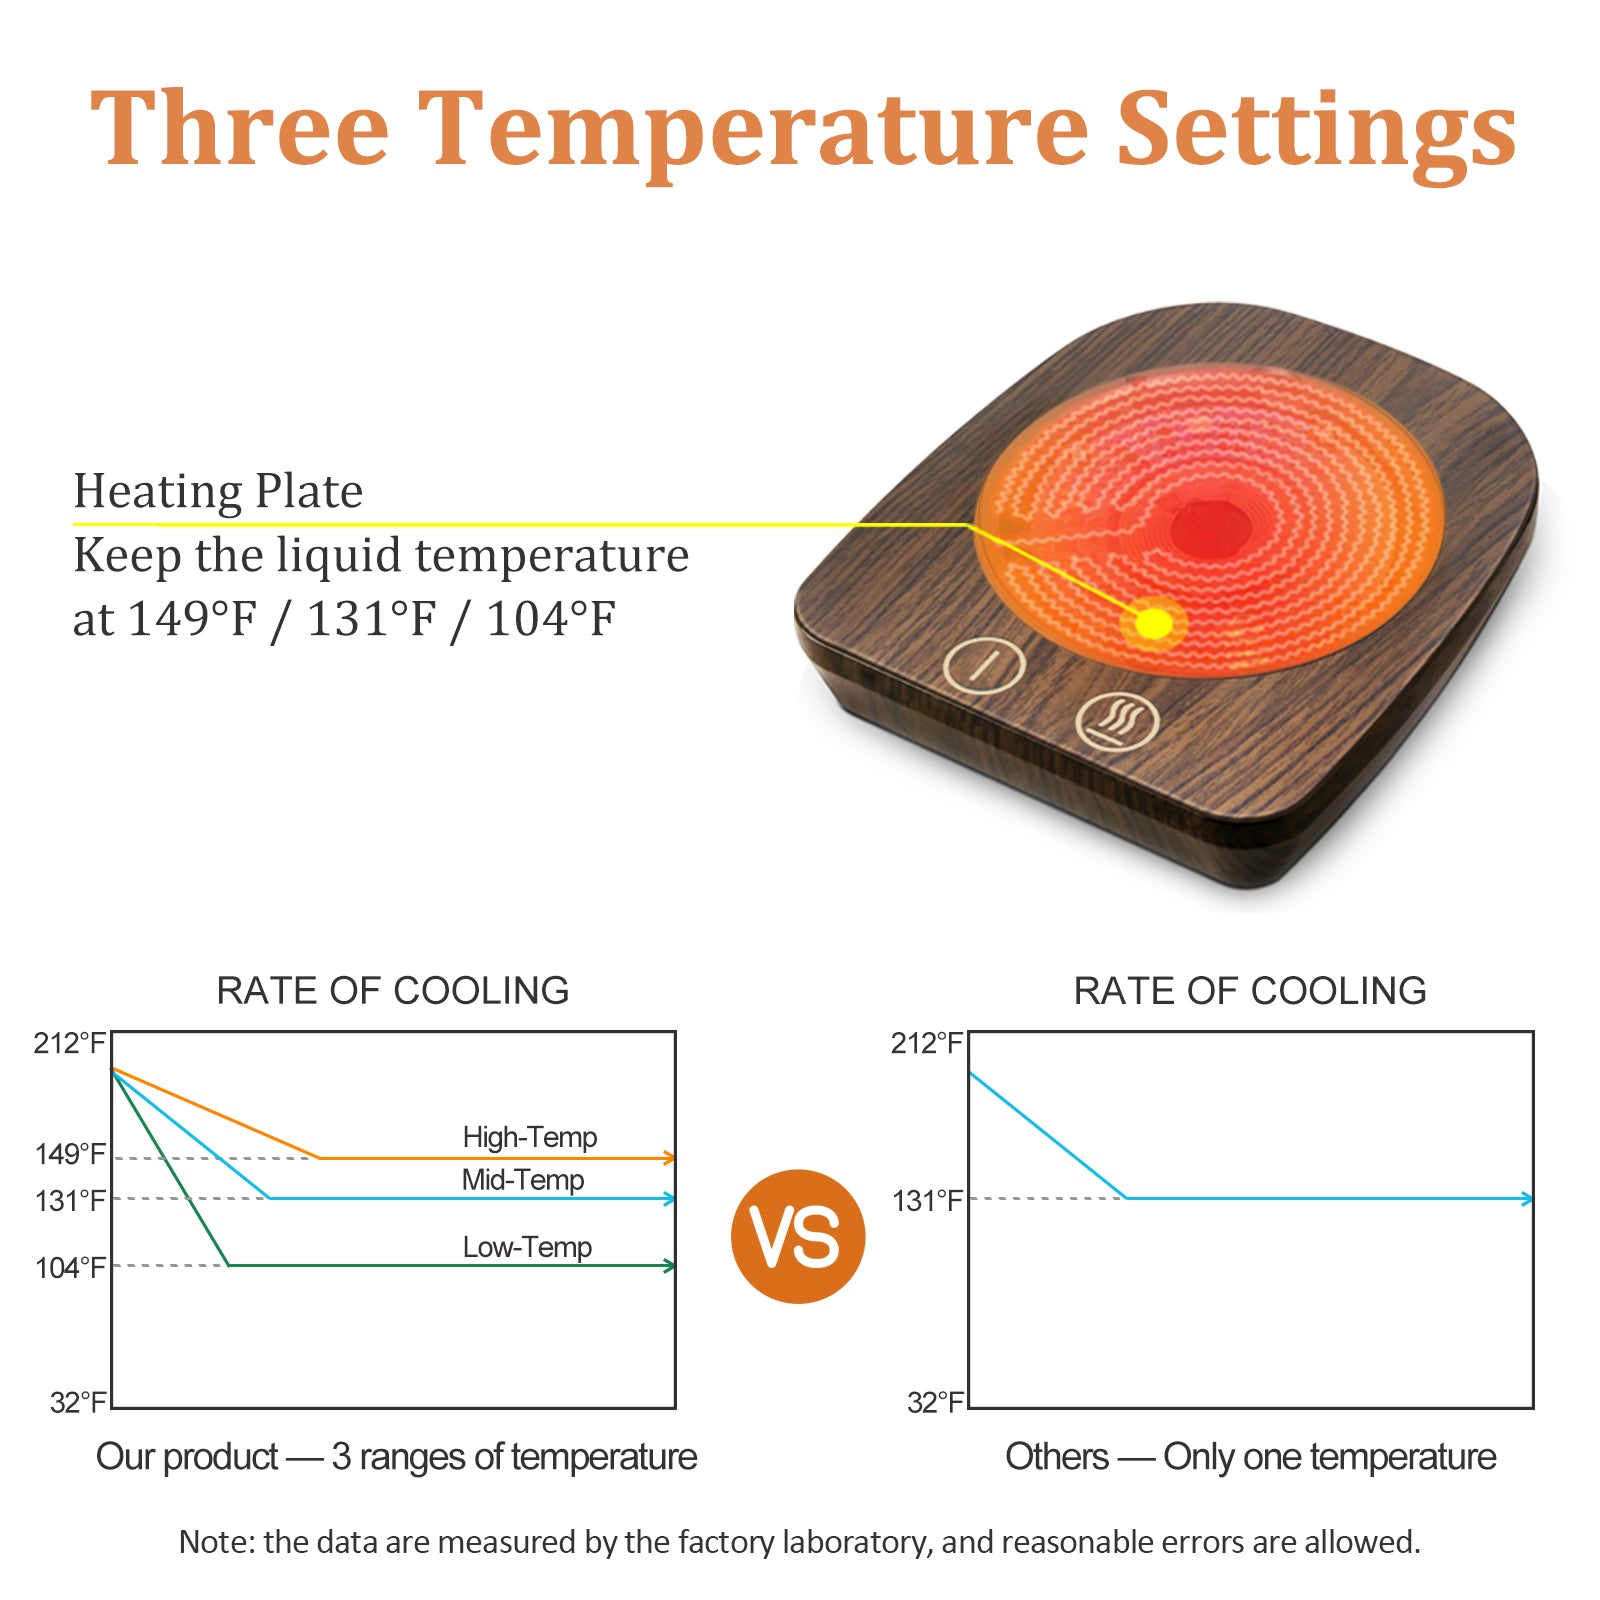 VOBAGA Coffee Mug Warmer has three temperature settings » Gadget Flow